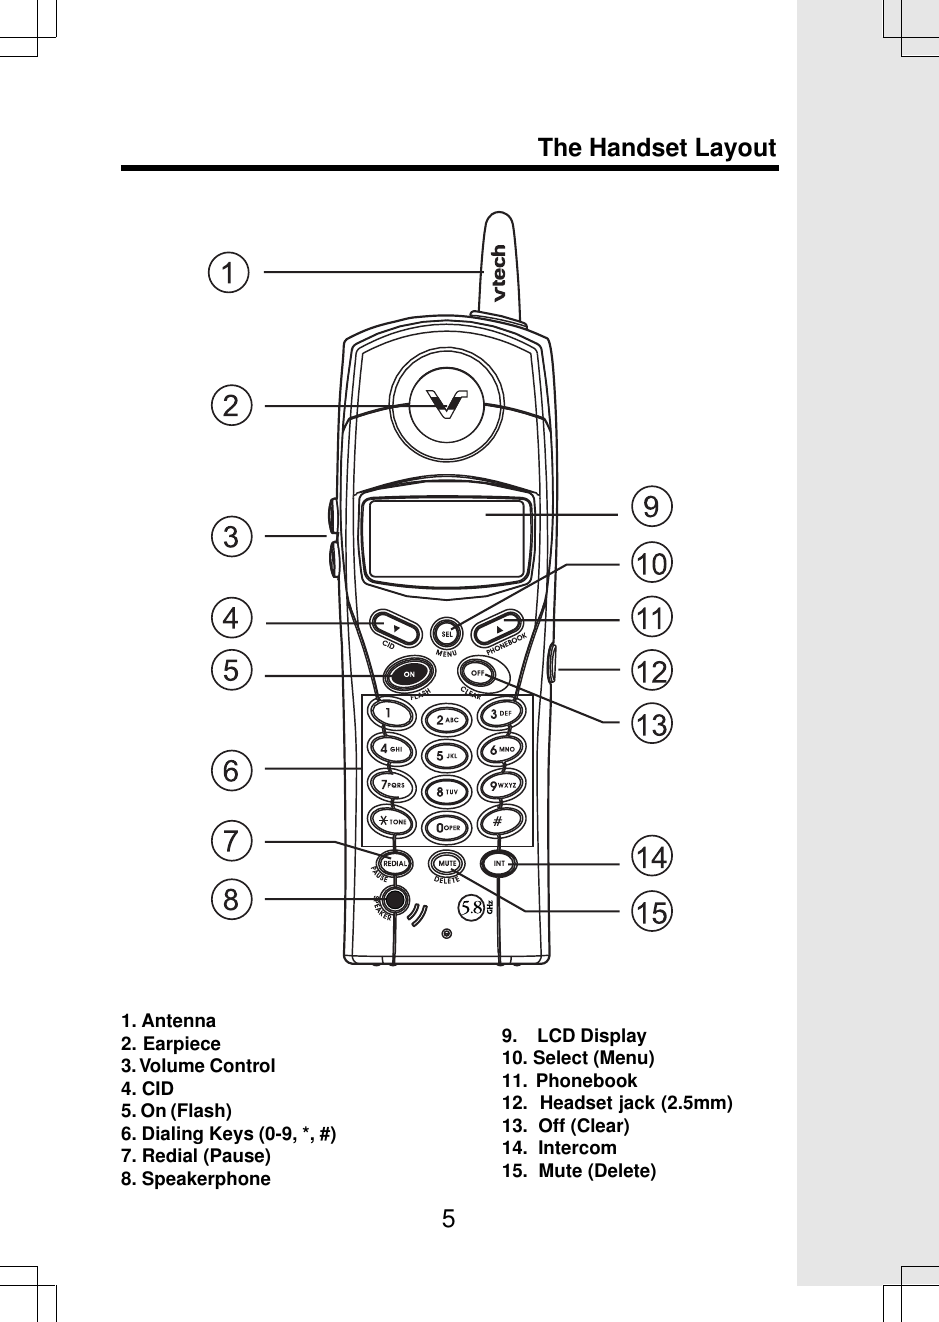 51. Antenna2. Earpiece3. Volume Control4. CID5. On (Flash)6. Dialing Keys (0-9, *, #)7. Redial (Pause)8. SpeakerphoneThe Handset Layout9.    LCD Display10. Select (Menu)11.  Phonebook12.  Headset jack (2.5mm)13.  Off (Clear)14.  Intercom15.  Mute (Delete)